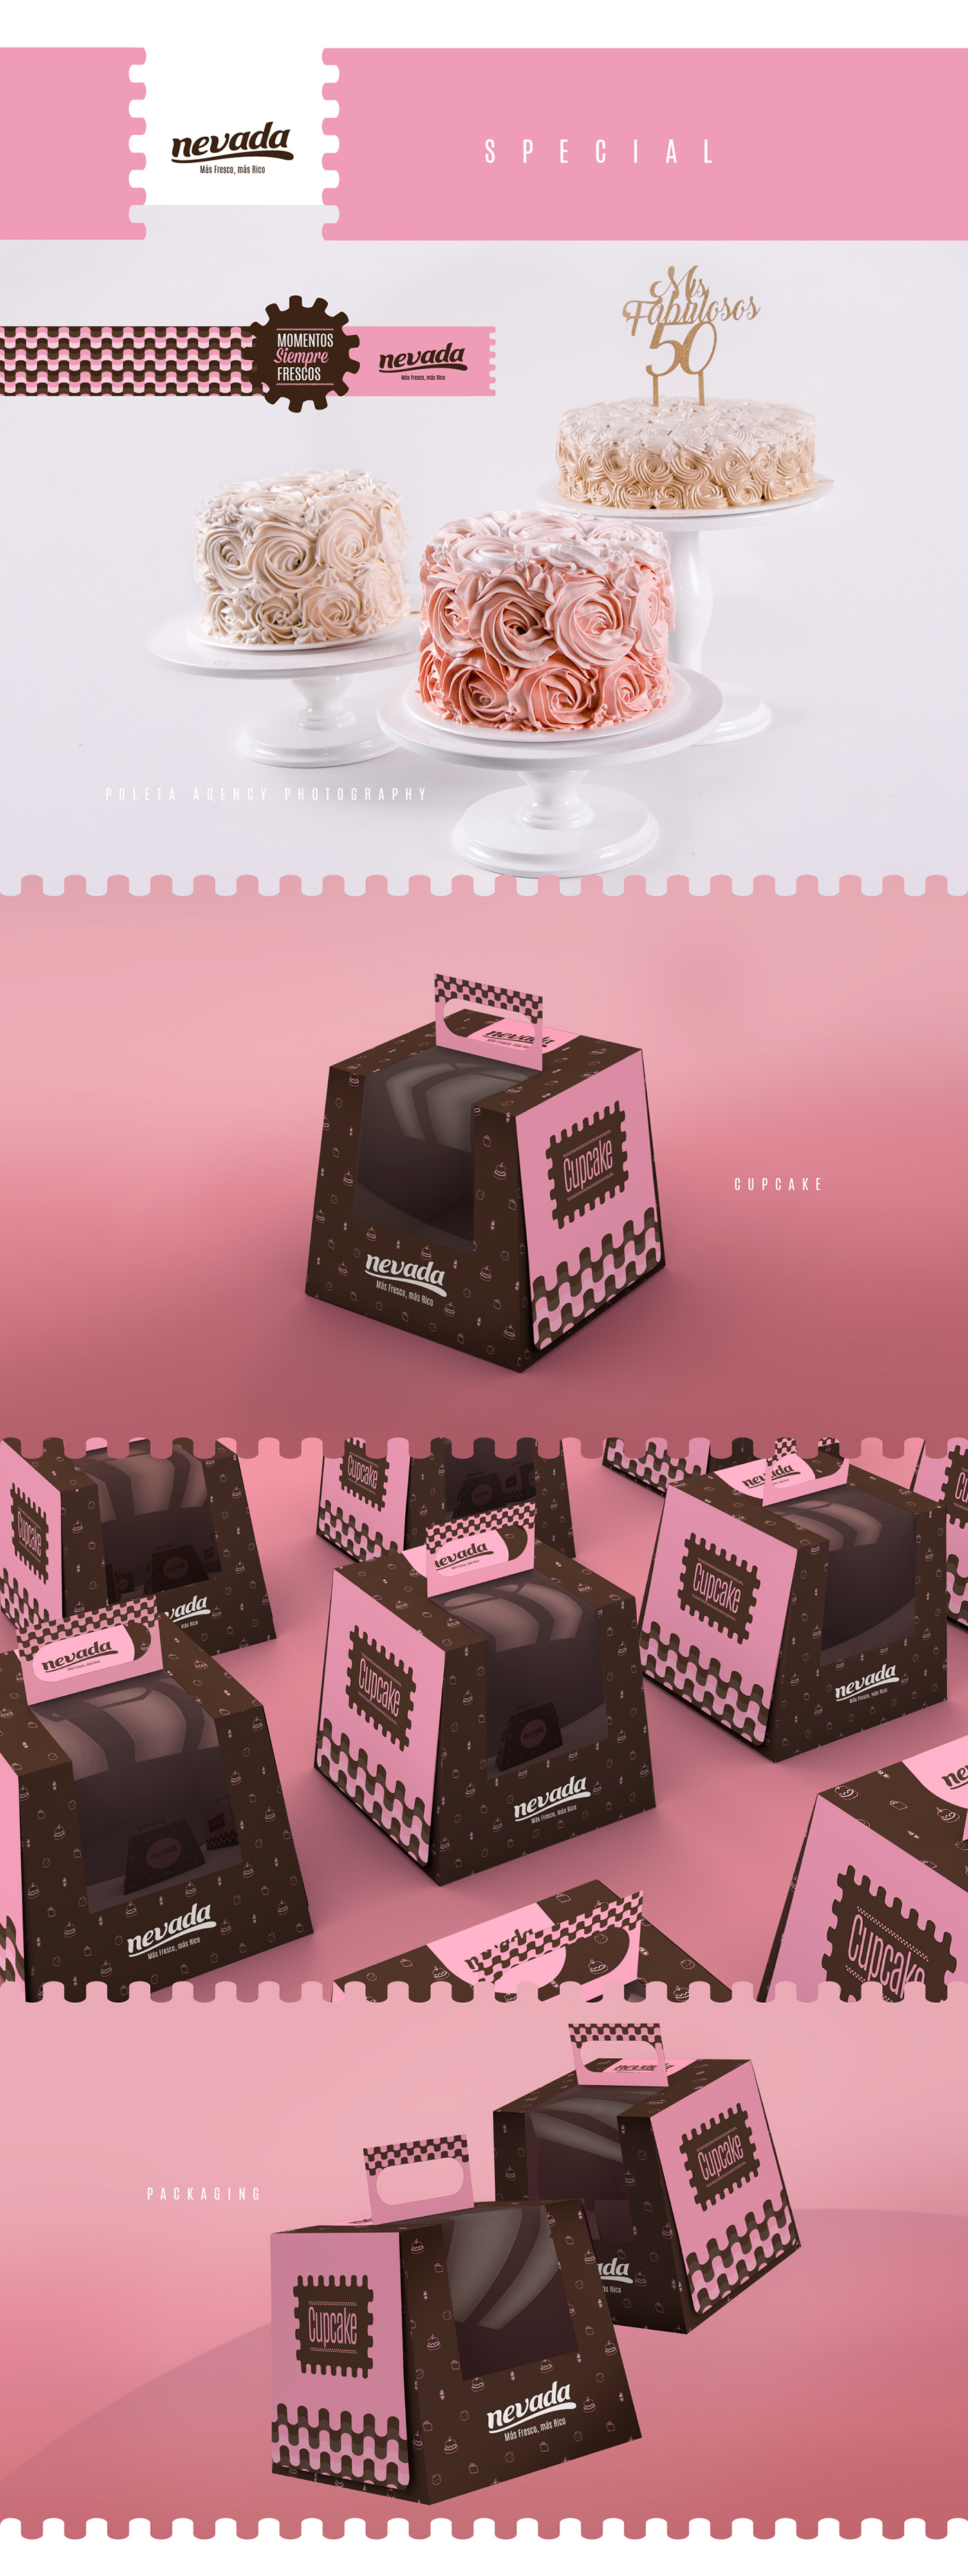 cakes cupcakes macarons Packaging branding  fresco nevada poleta institutional detalis